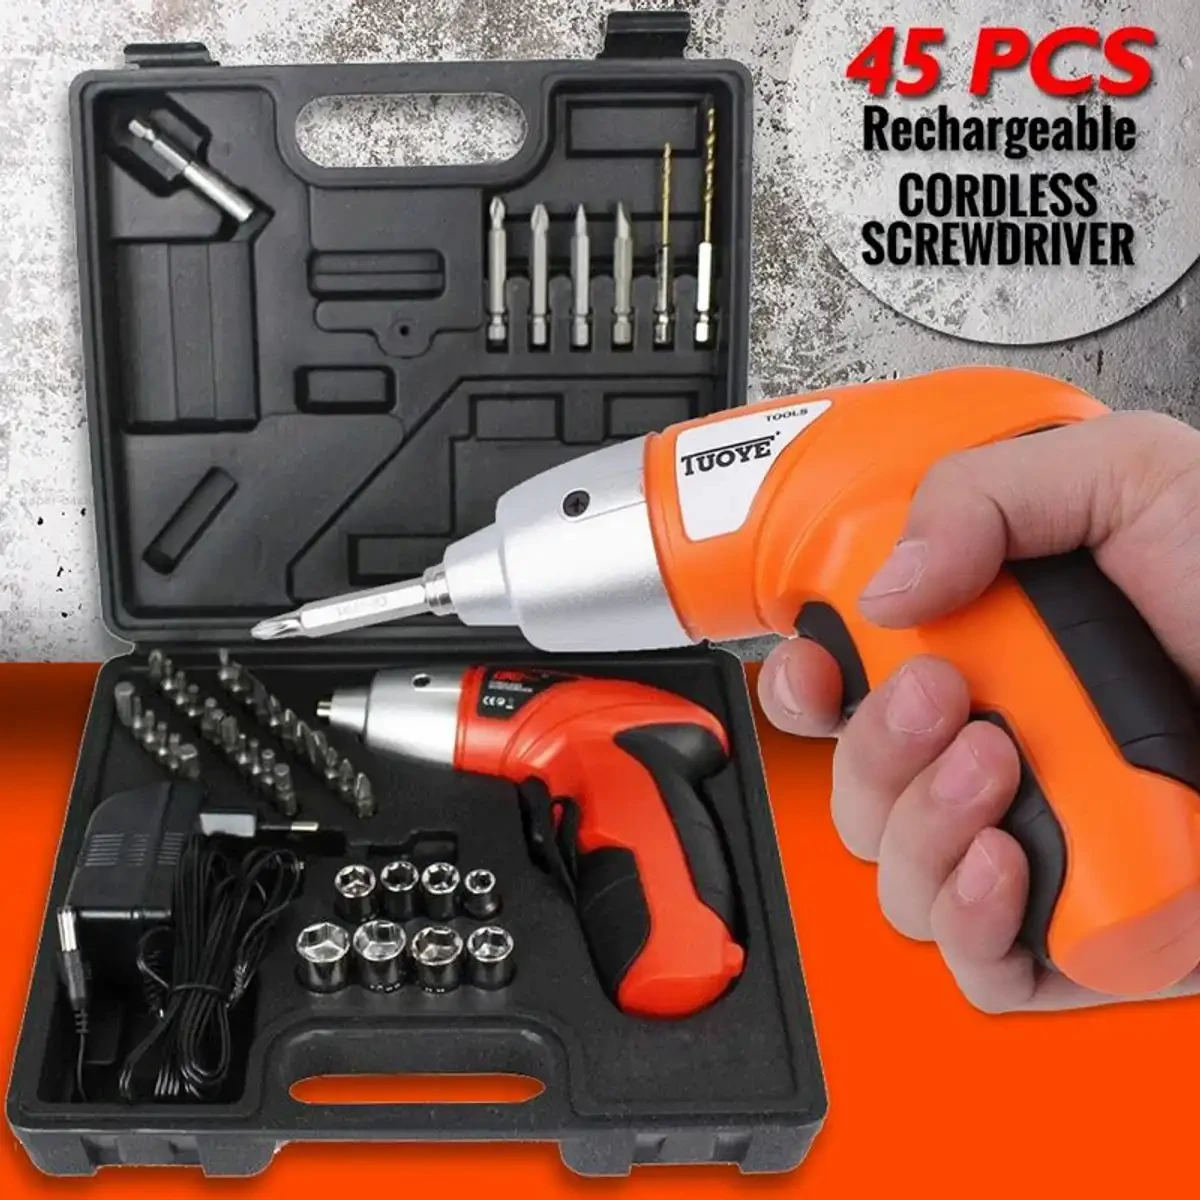 45 Pcs Tools Set Rechargeable Cordless Screwdriver